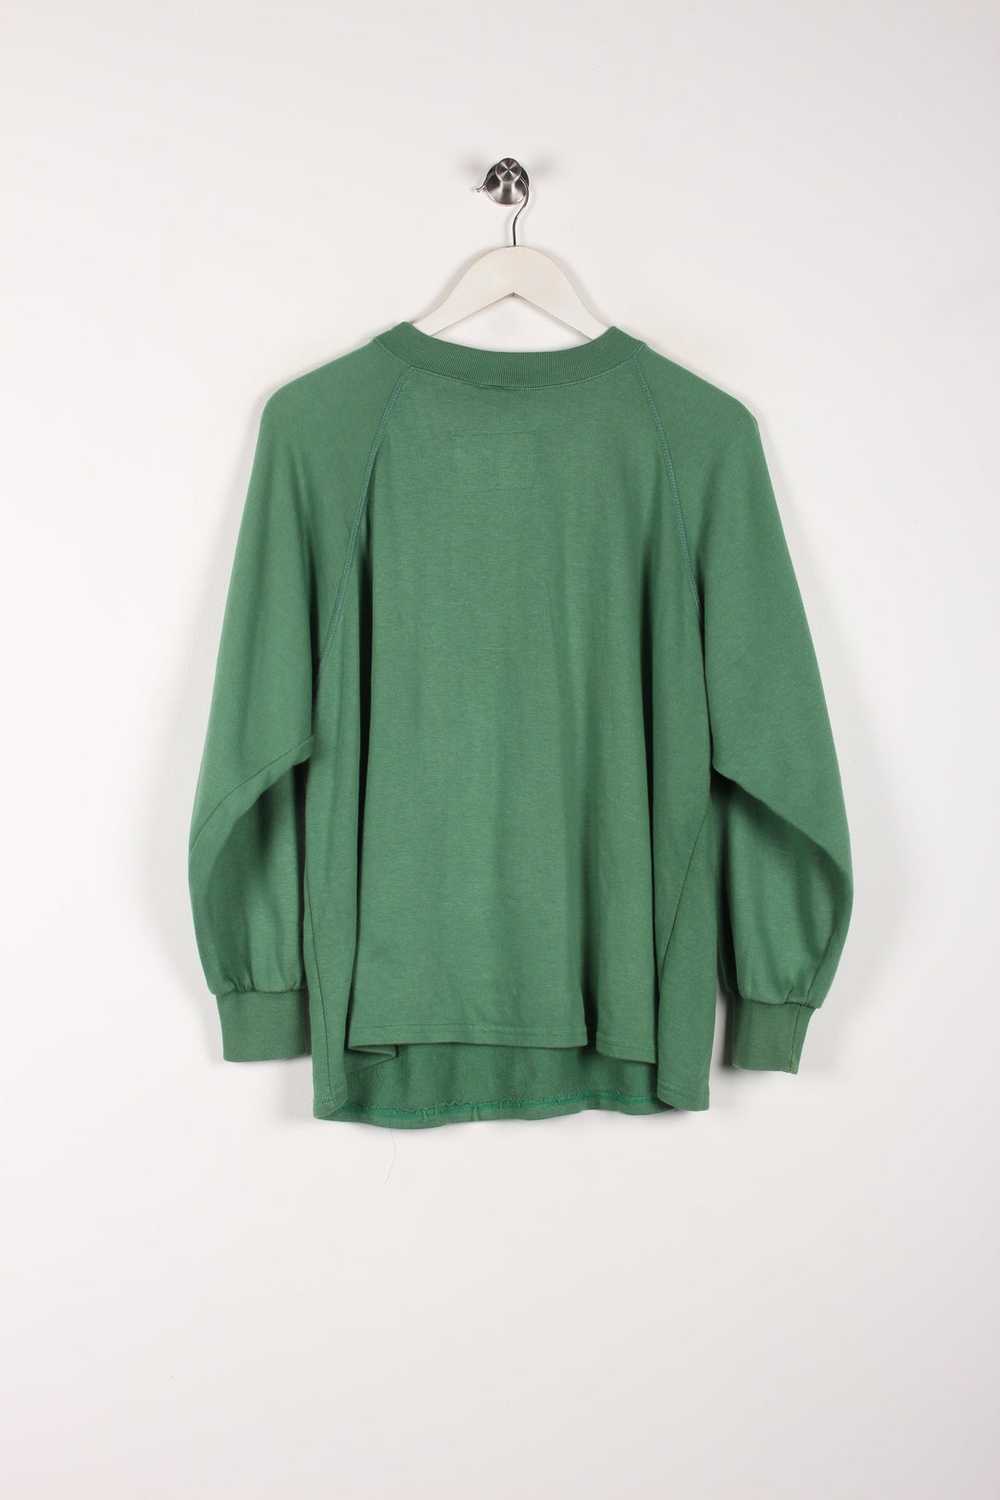 90's Champion Sweatshirt Green Small - image 3